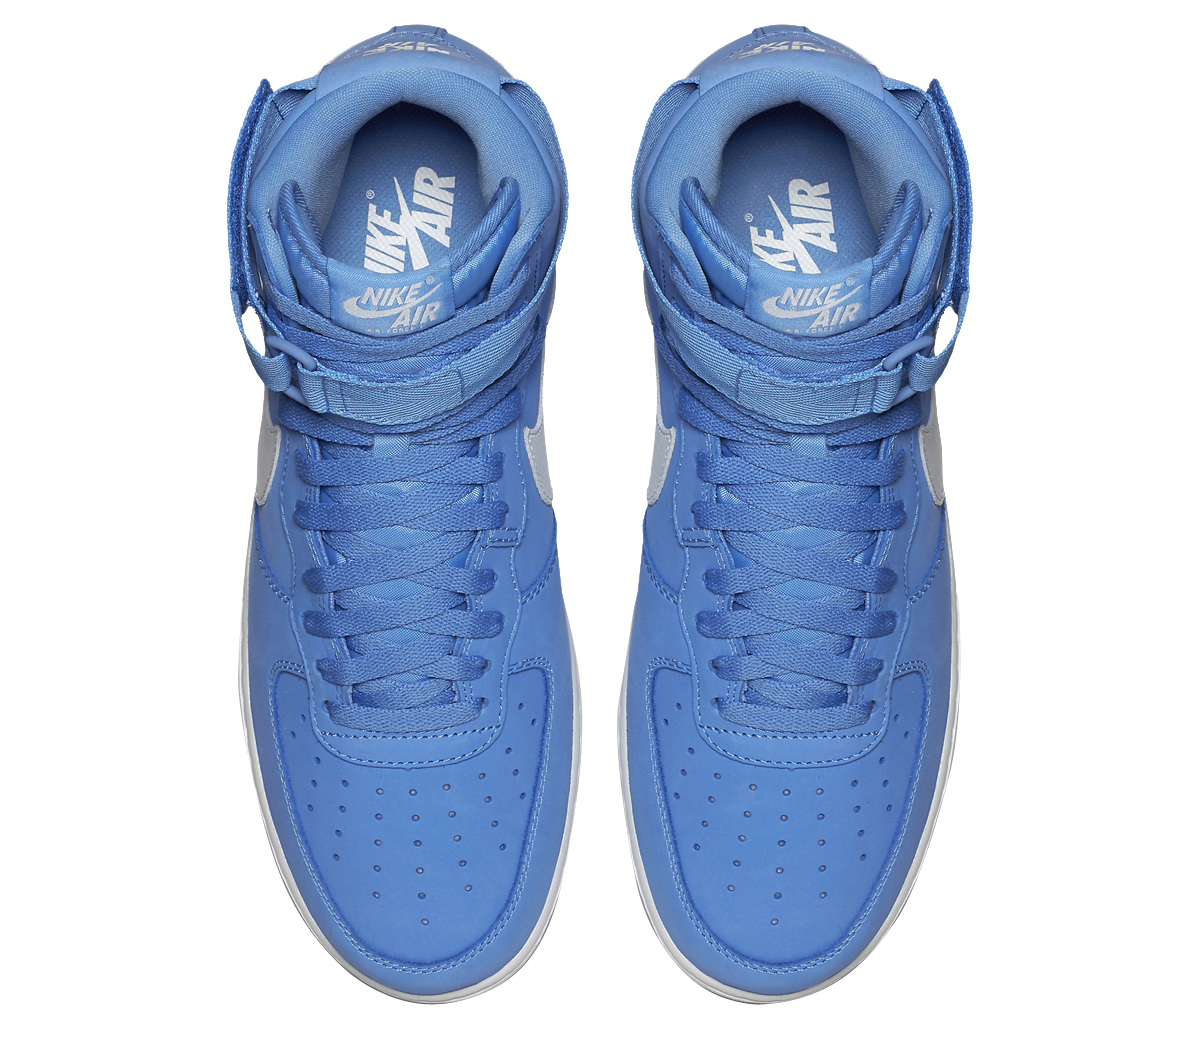 Nike Air Force 1 High OG Retro - Powder Blue